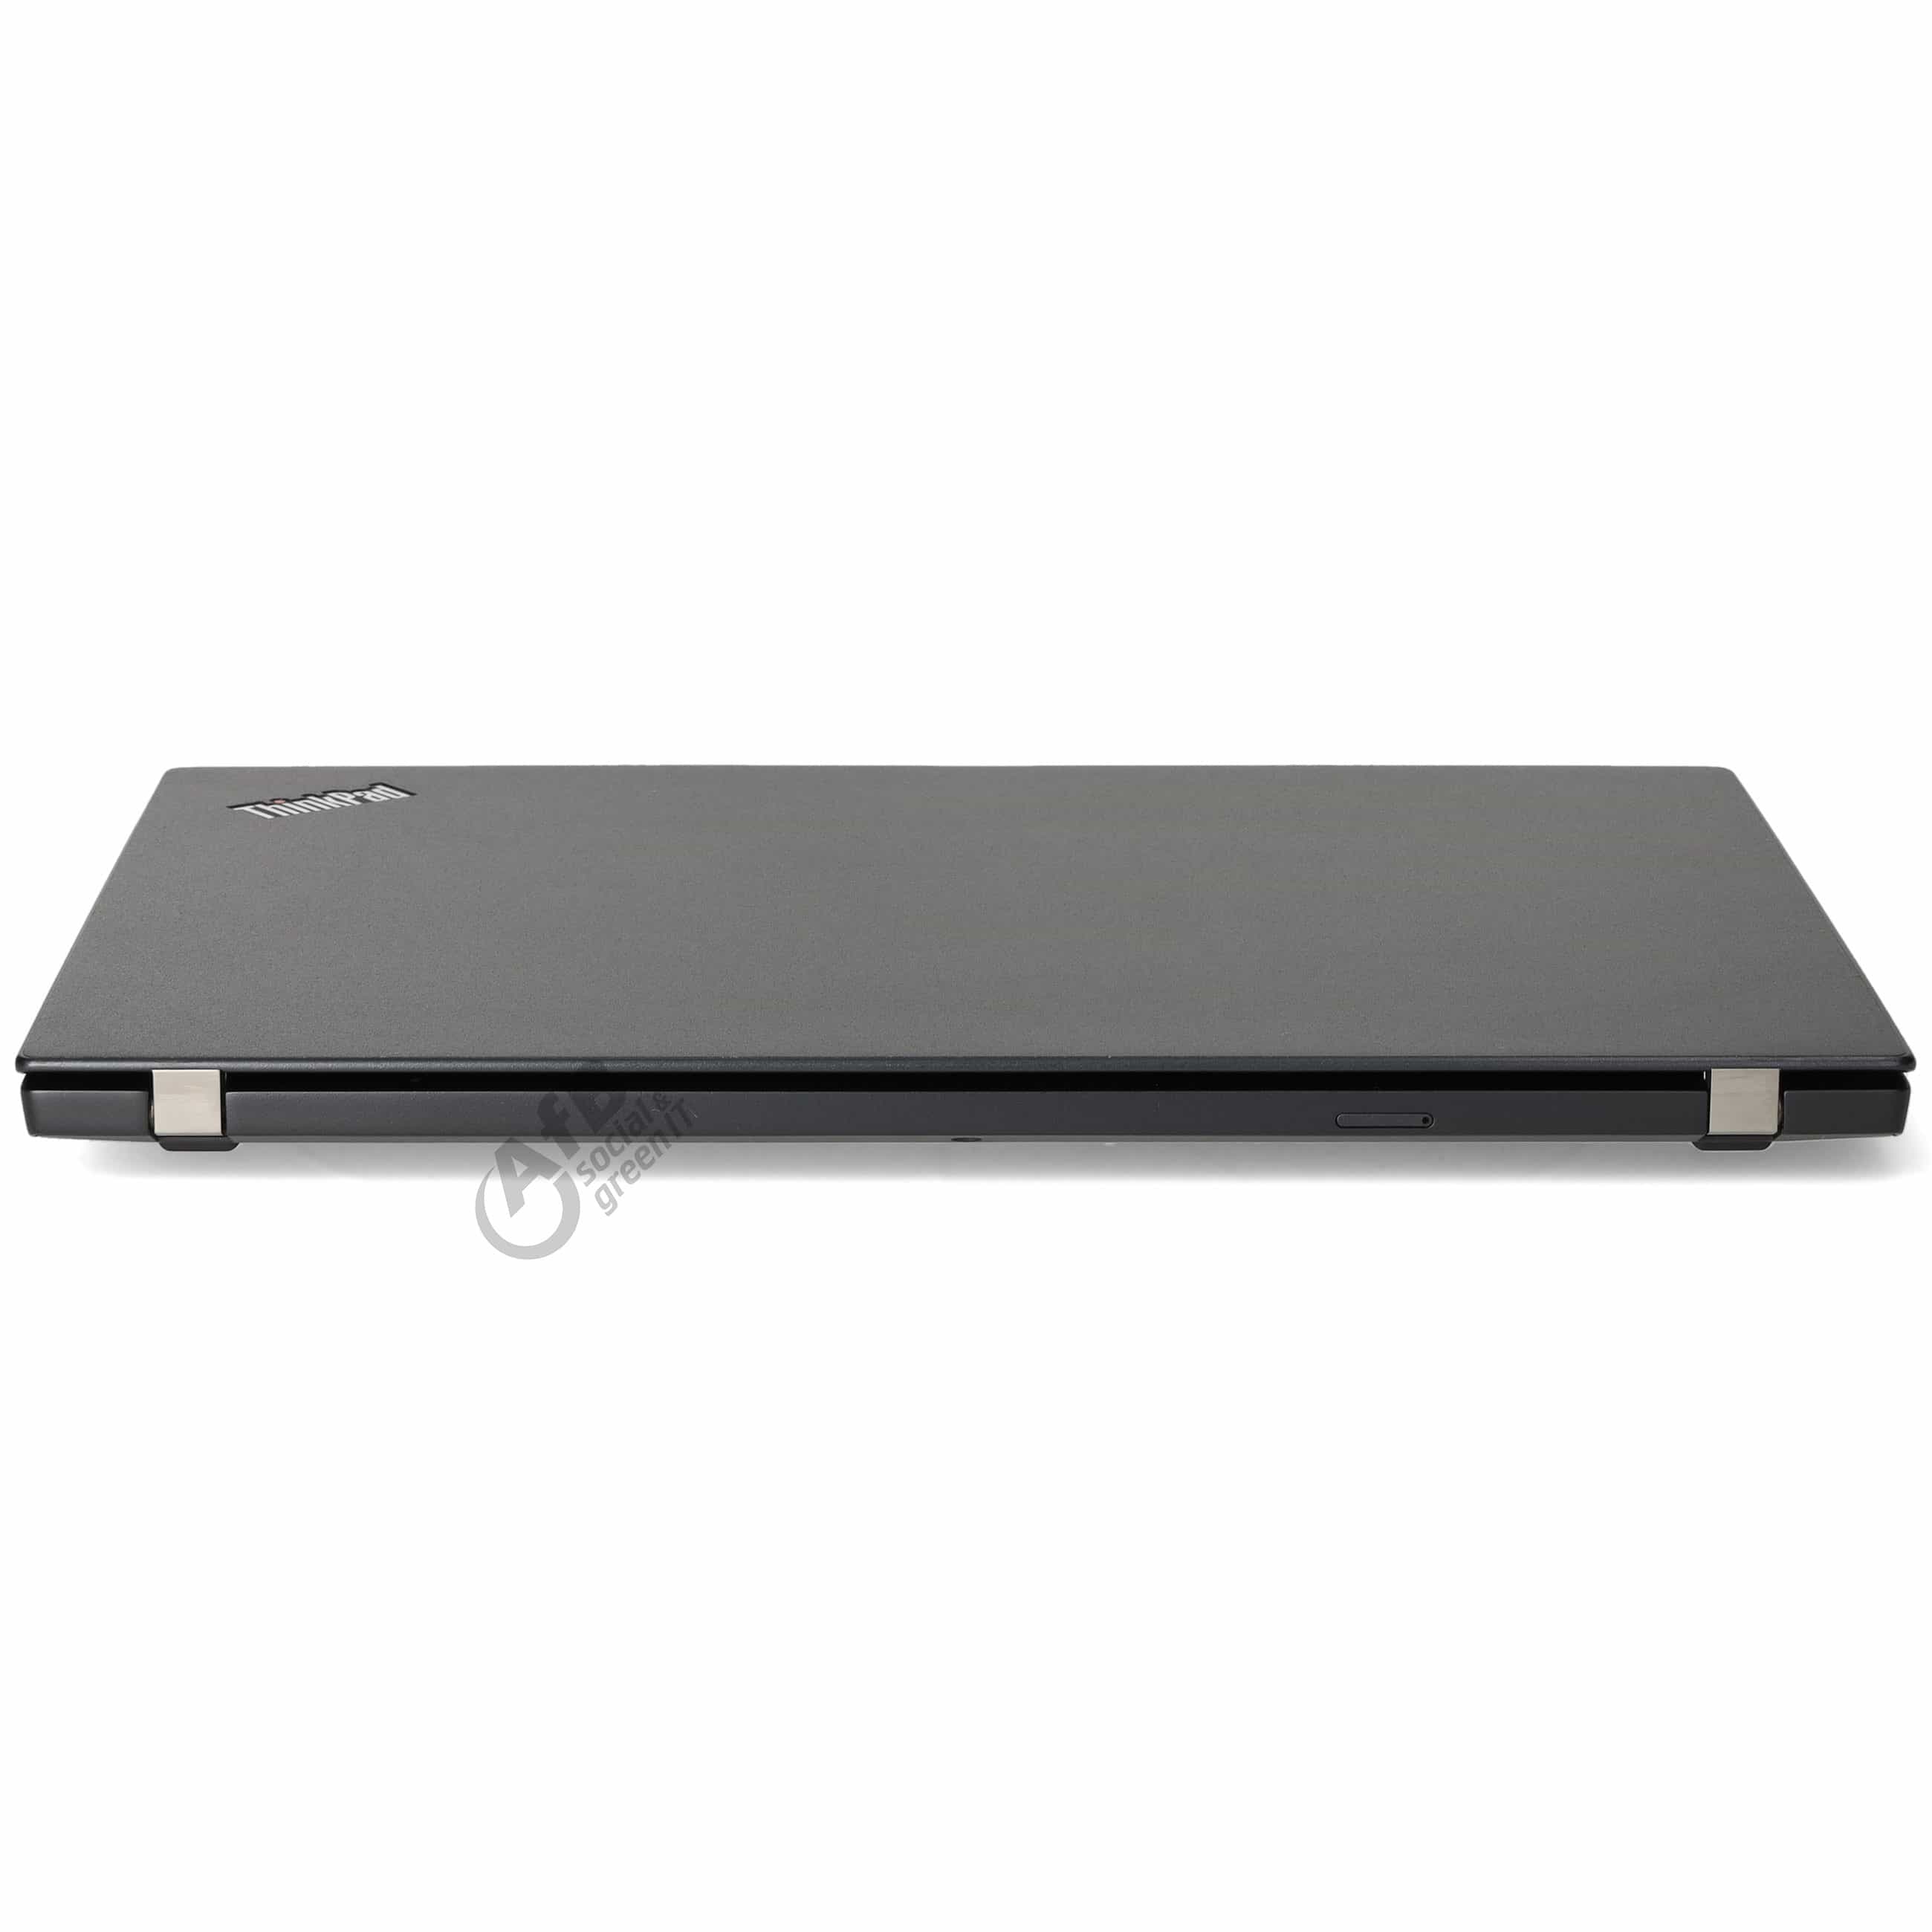 Lenovo ThinkPad T480  

 - 14,0 Zoll - Intel Core i5 7300U @ 2,6 GHz - 8 GB DDR4 - 256 GB SSD - 1920 x 1080 FHD - Windows 10 Professional